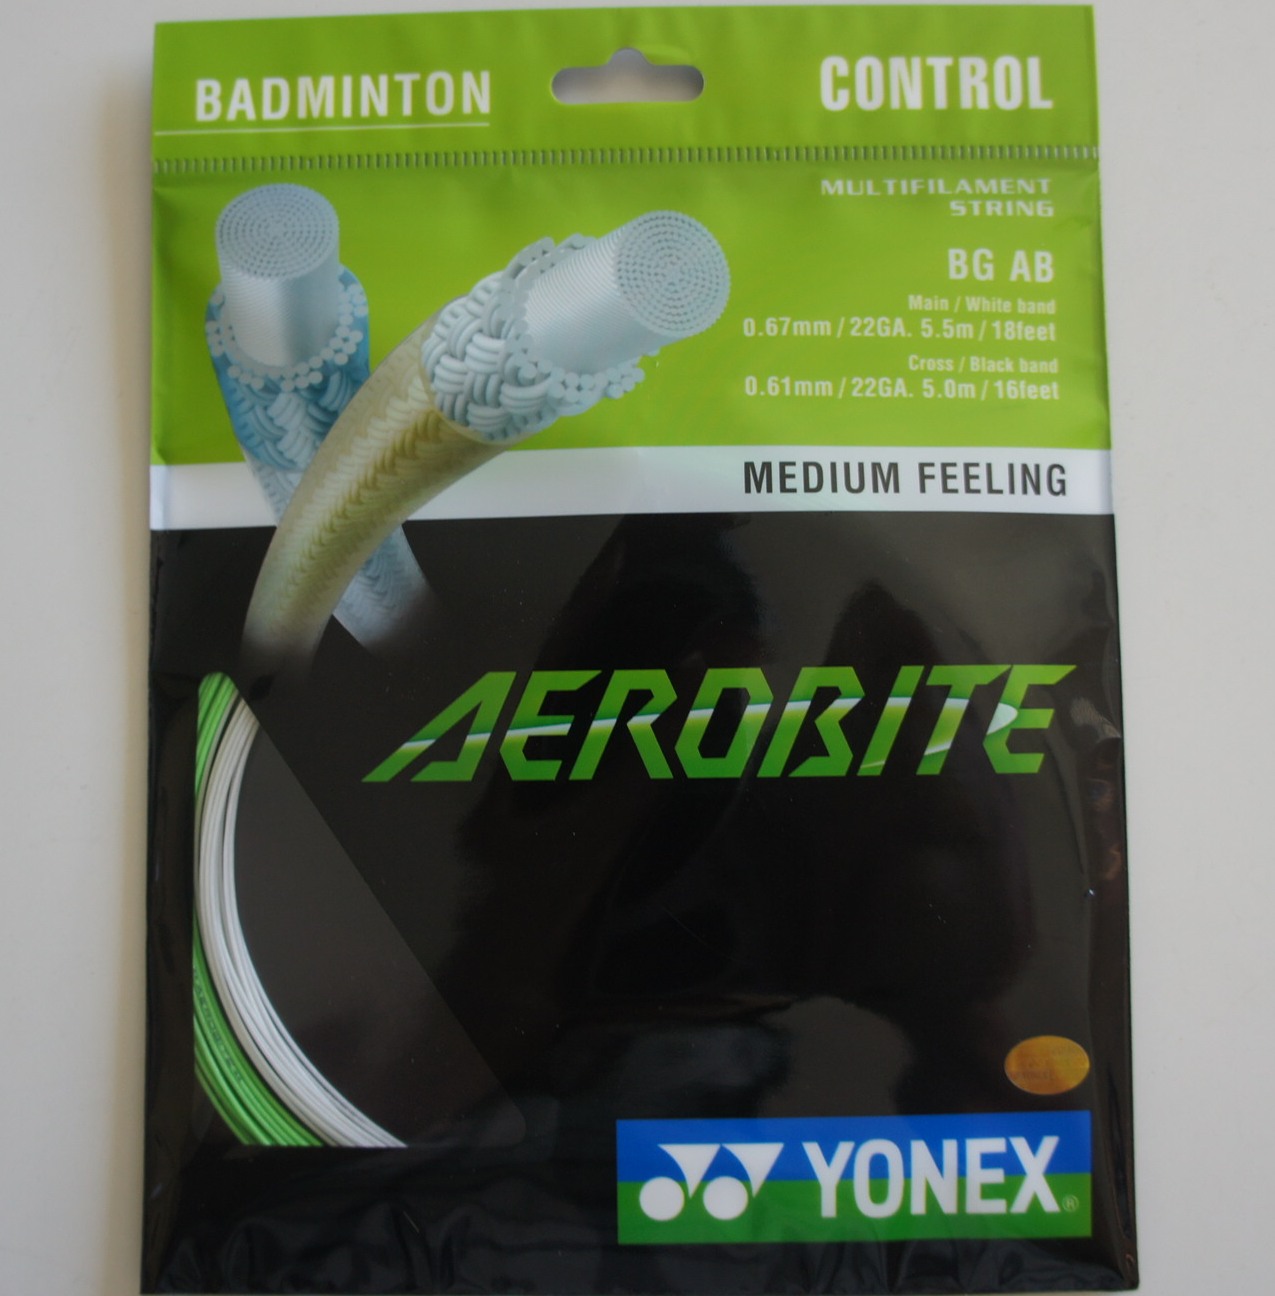 YONEX BG AB Aerobite Badminton String (5 Packs), Green/White